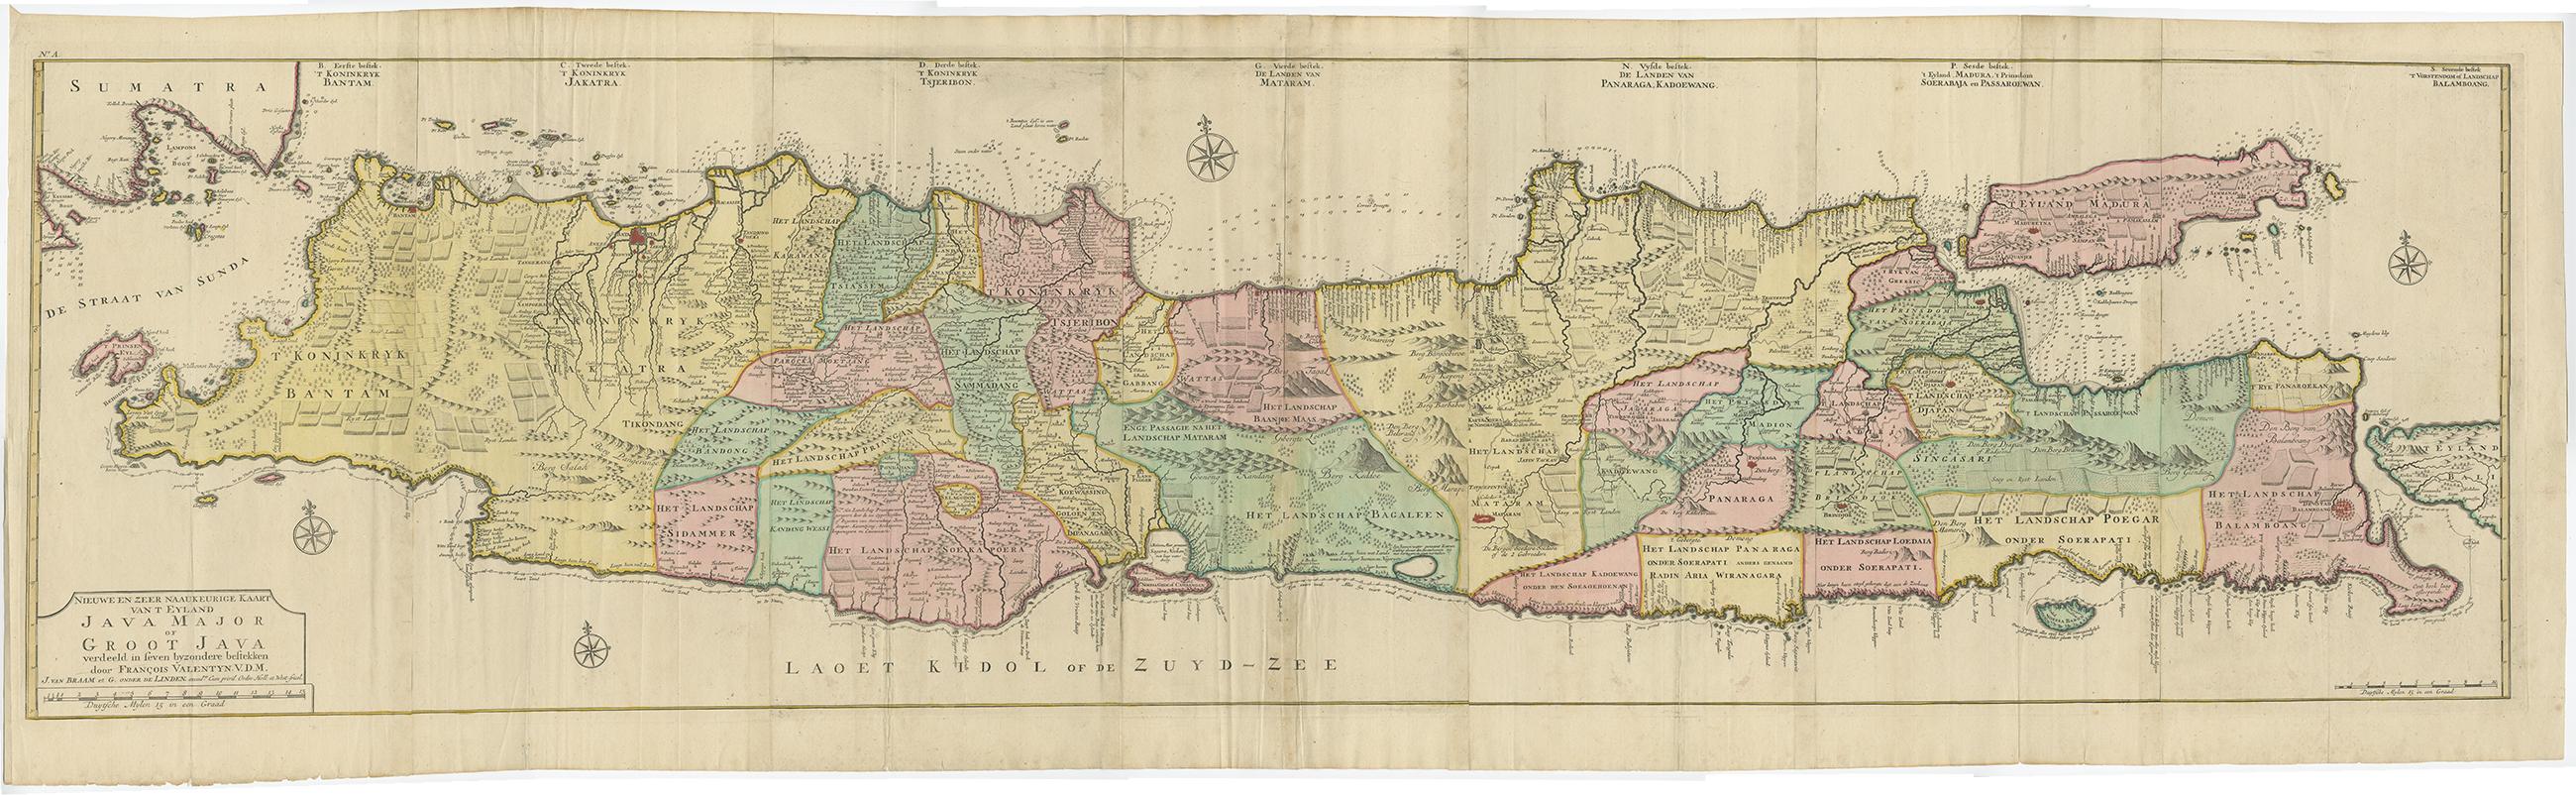 indonesia map java